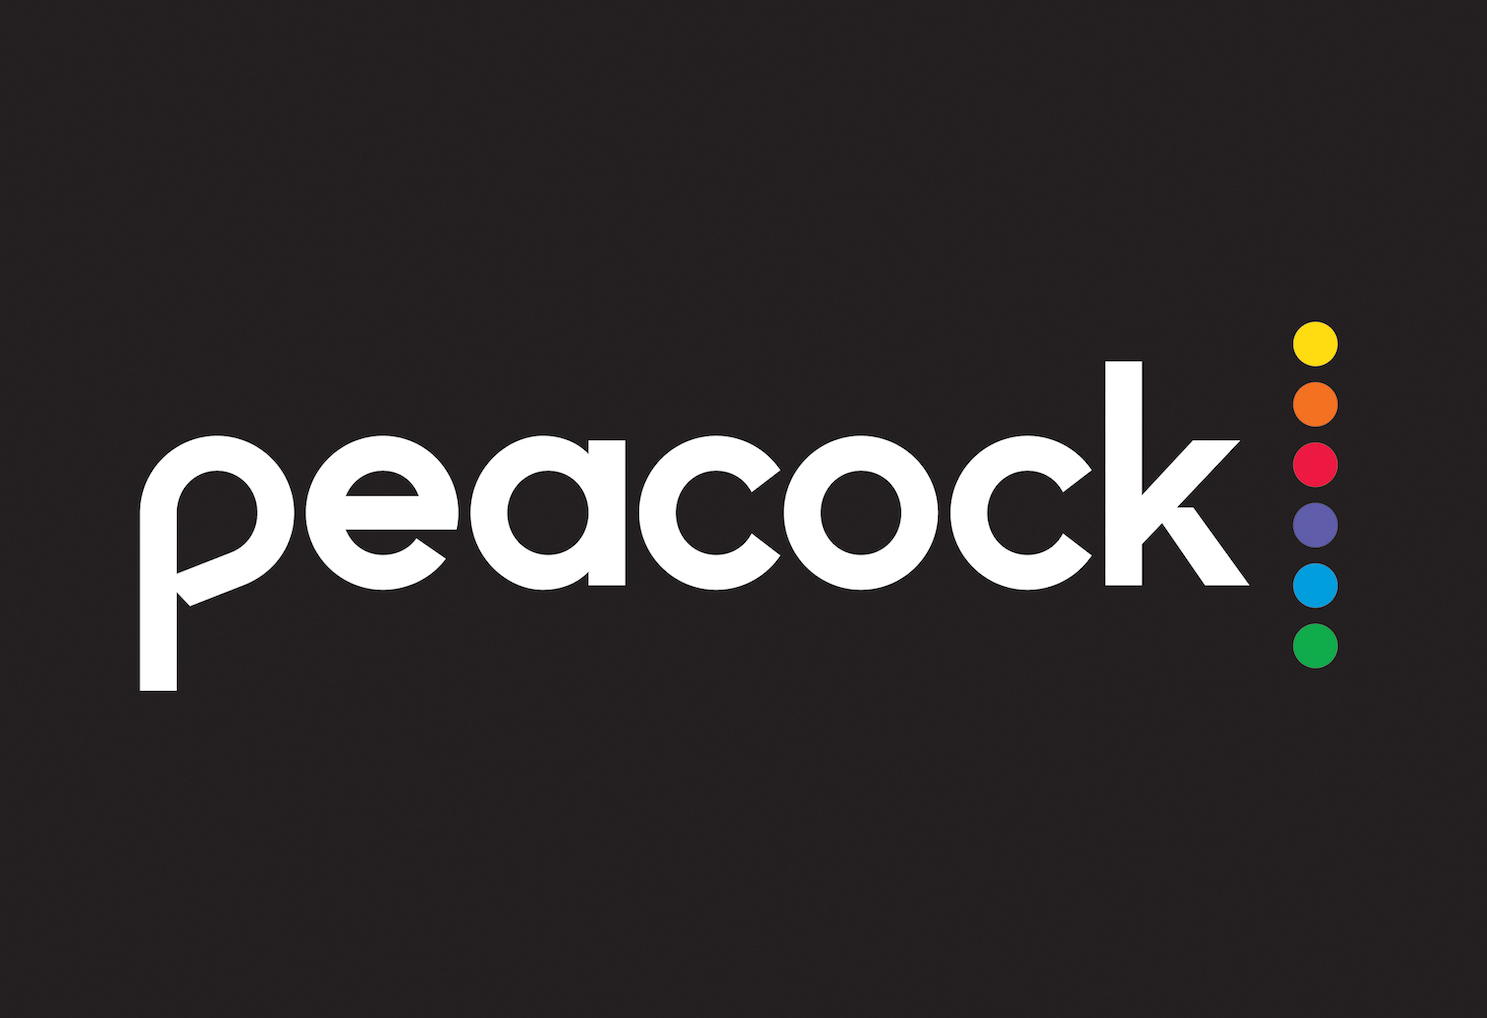 (Peacock logo courtesy of NBCUniversal)